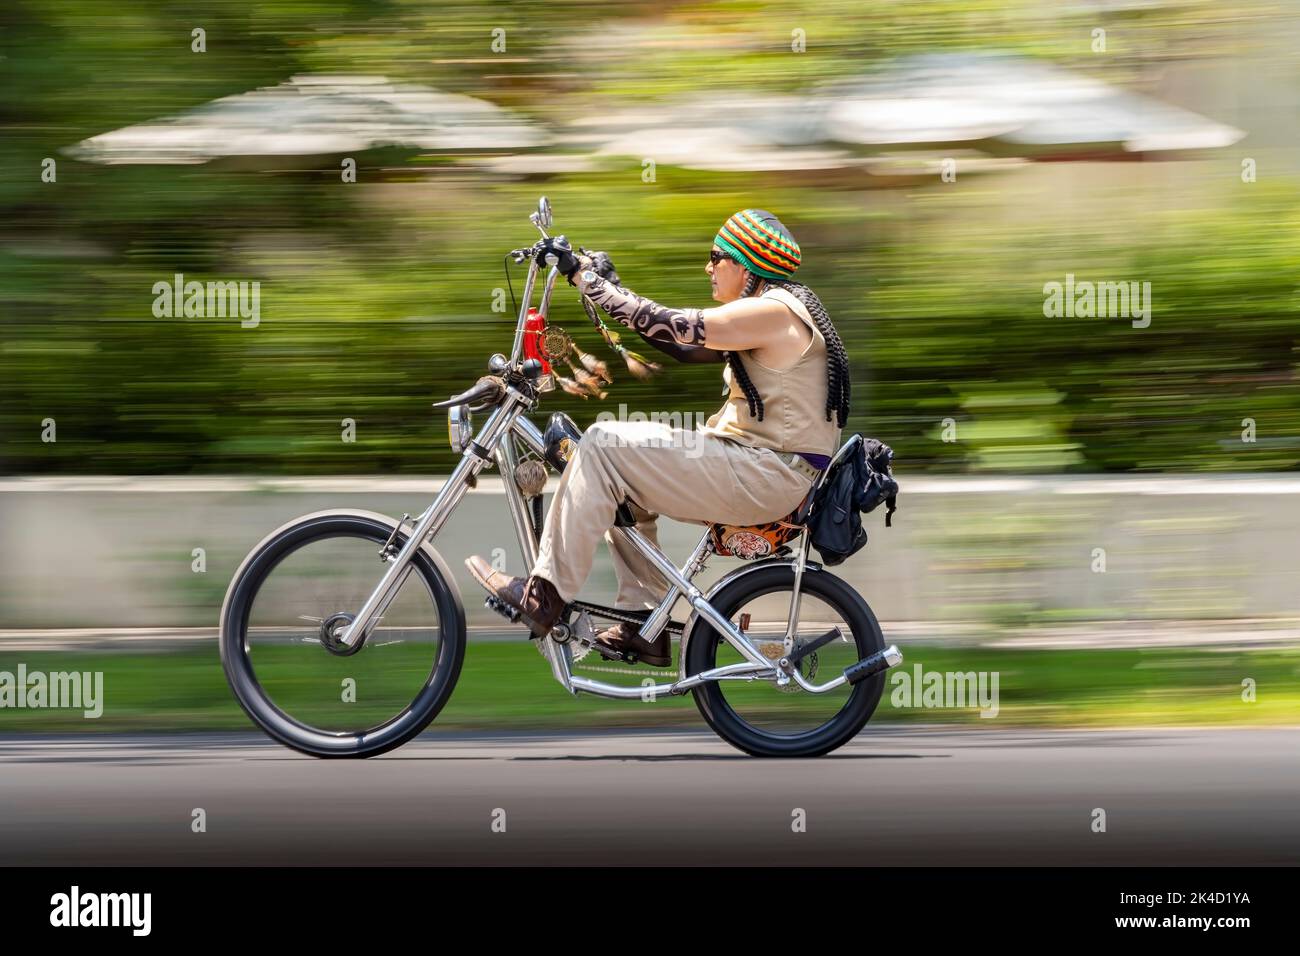 man bicycle, with dreadlocks and Rastafarian cap, sleeve simulating tattoos, custom chopper bike, blurred motion Stock Photo